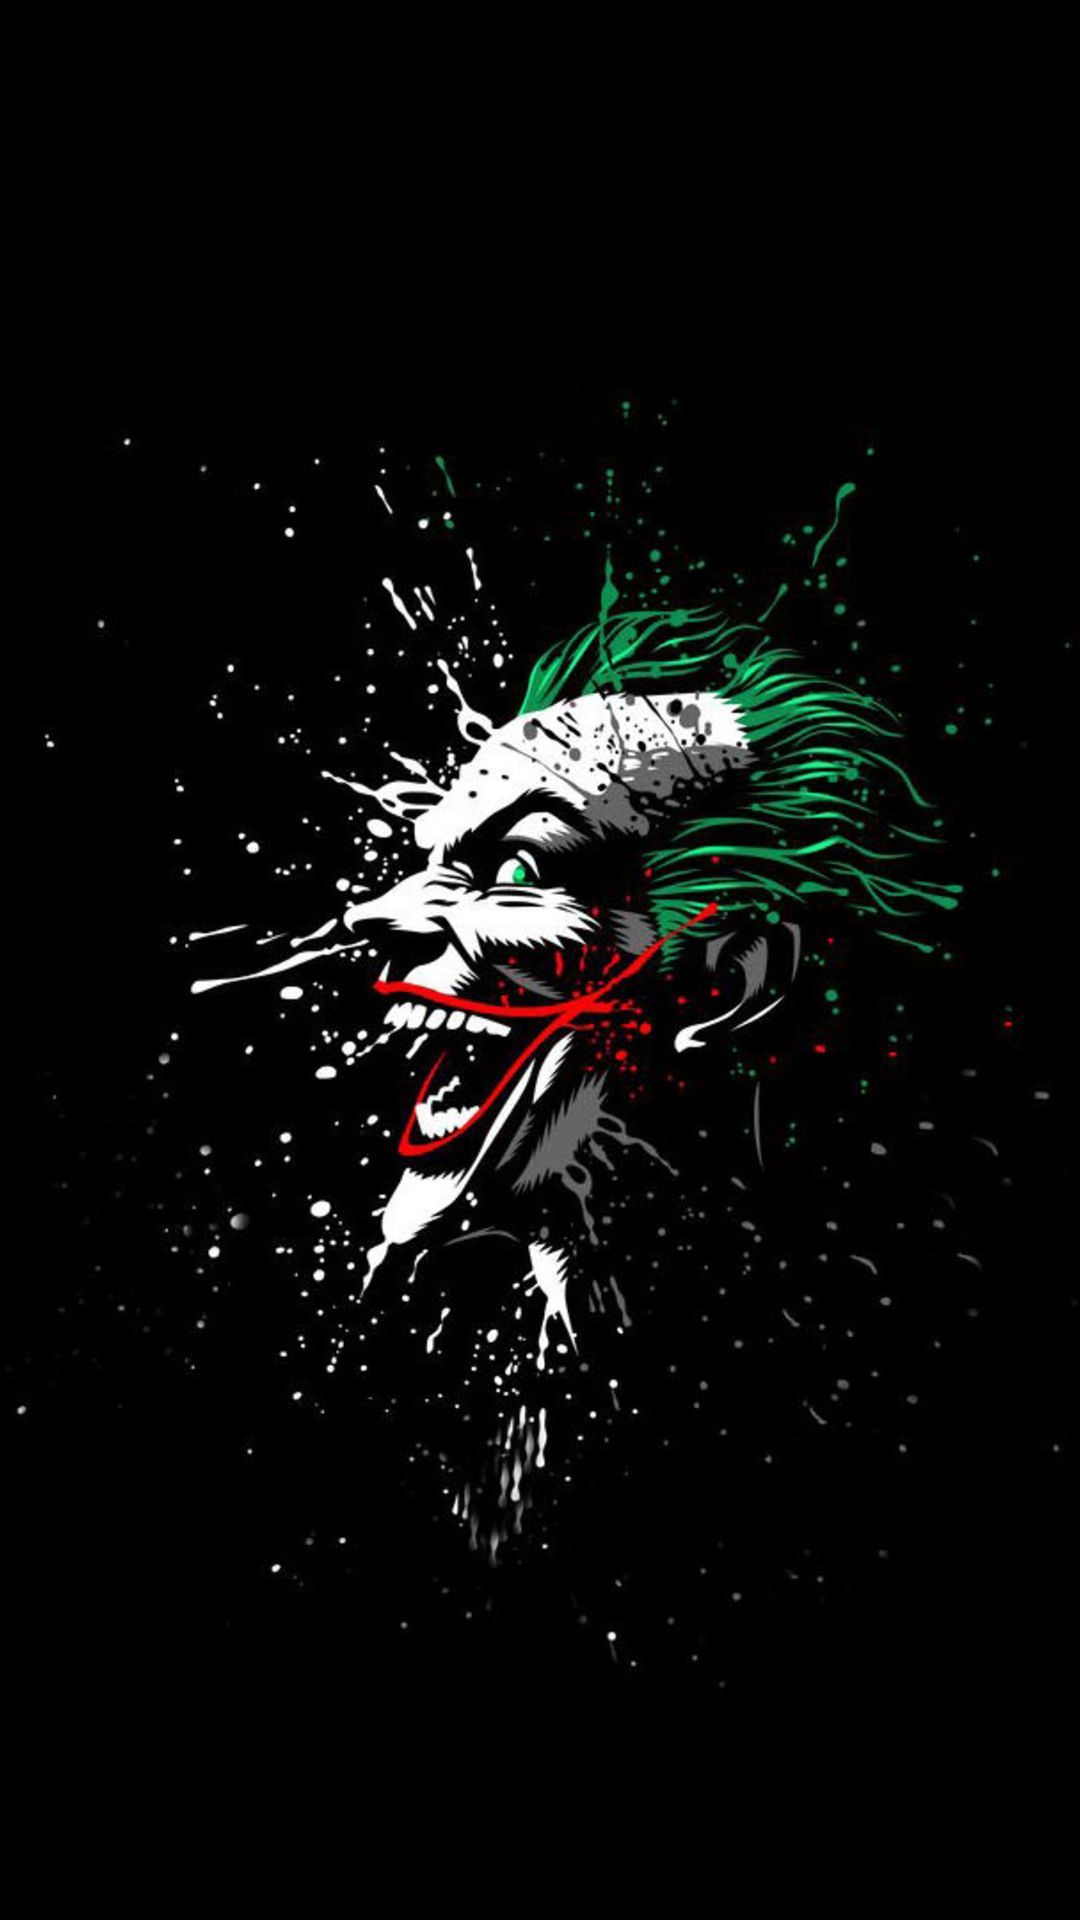 Joker iPhone Wallpaper Download. Joker artwork, Joker HD wallpaper, Joker iphone wallpaper